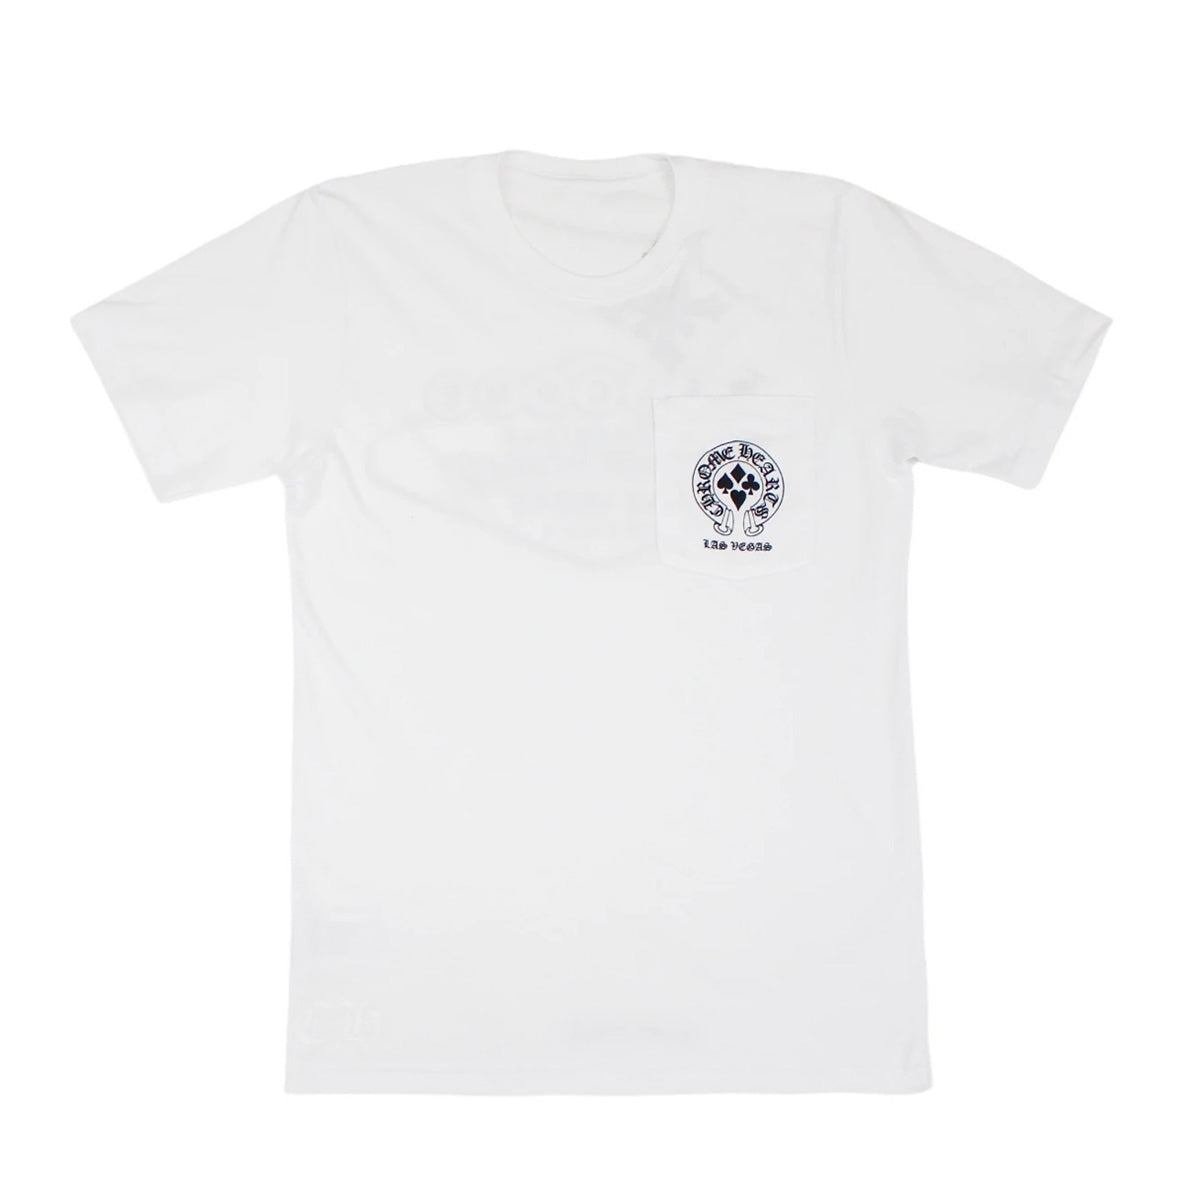 Chrome Hearts Las Vegas Exclusive T-Shirt White